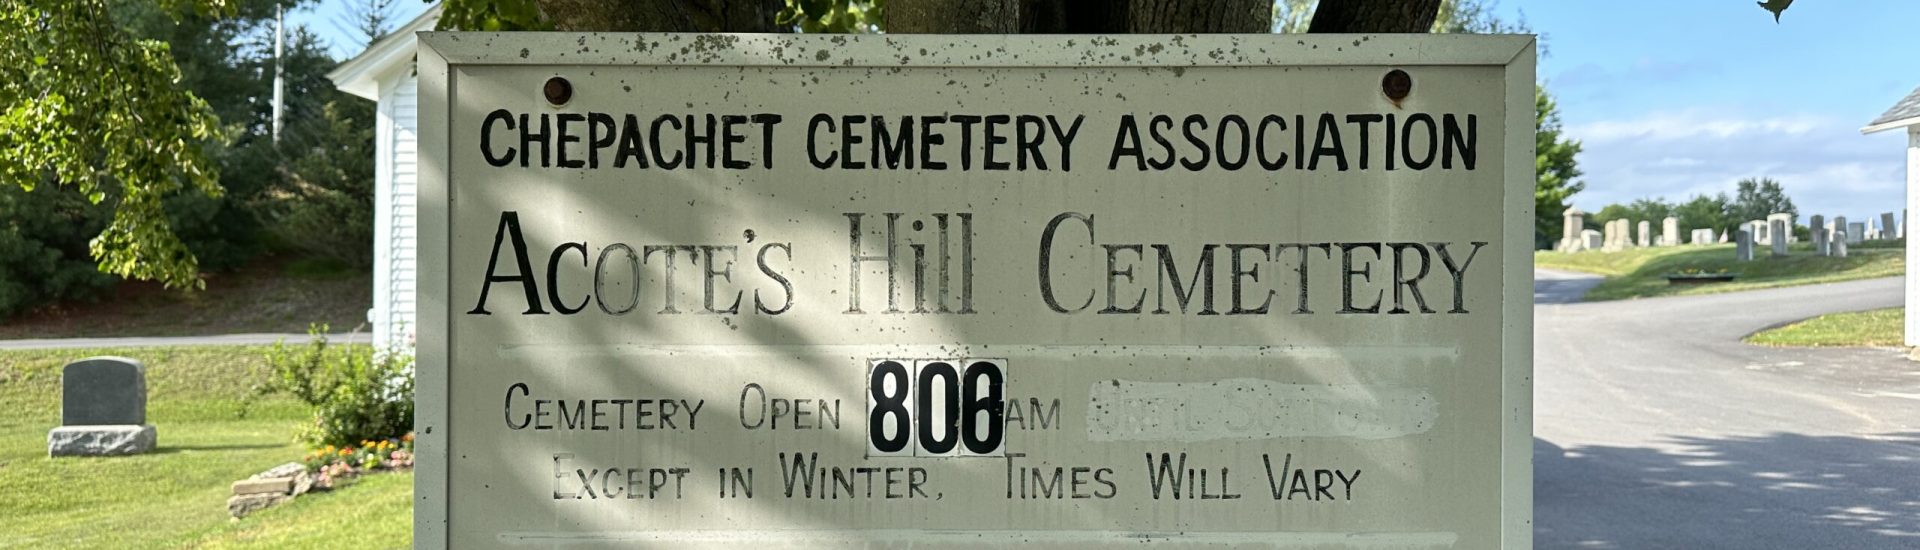 Acotes Hill Cemetery, Chepachet, Glocester, Rhode Island